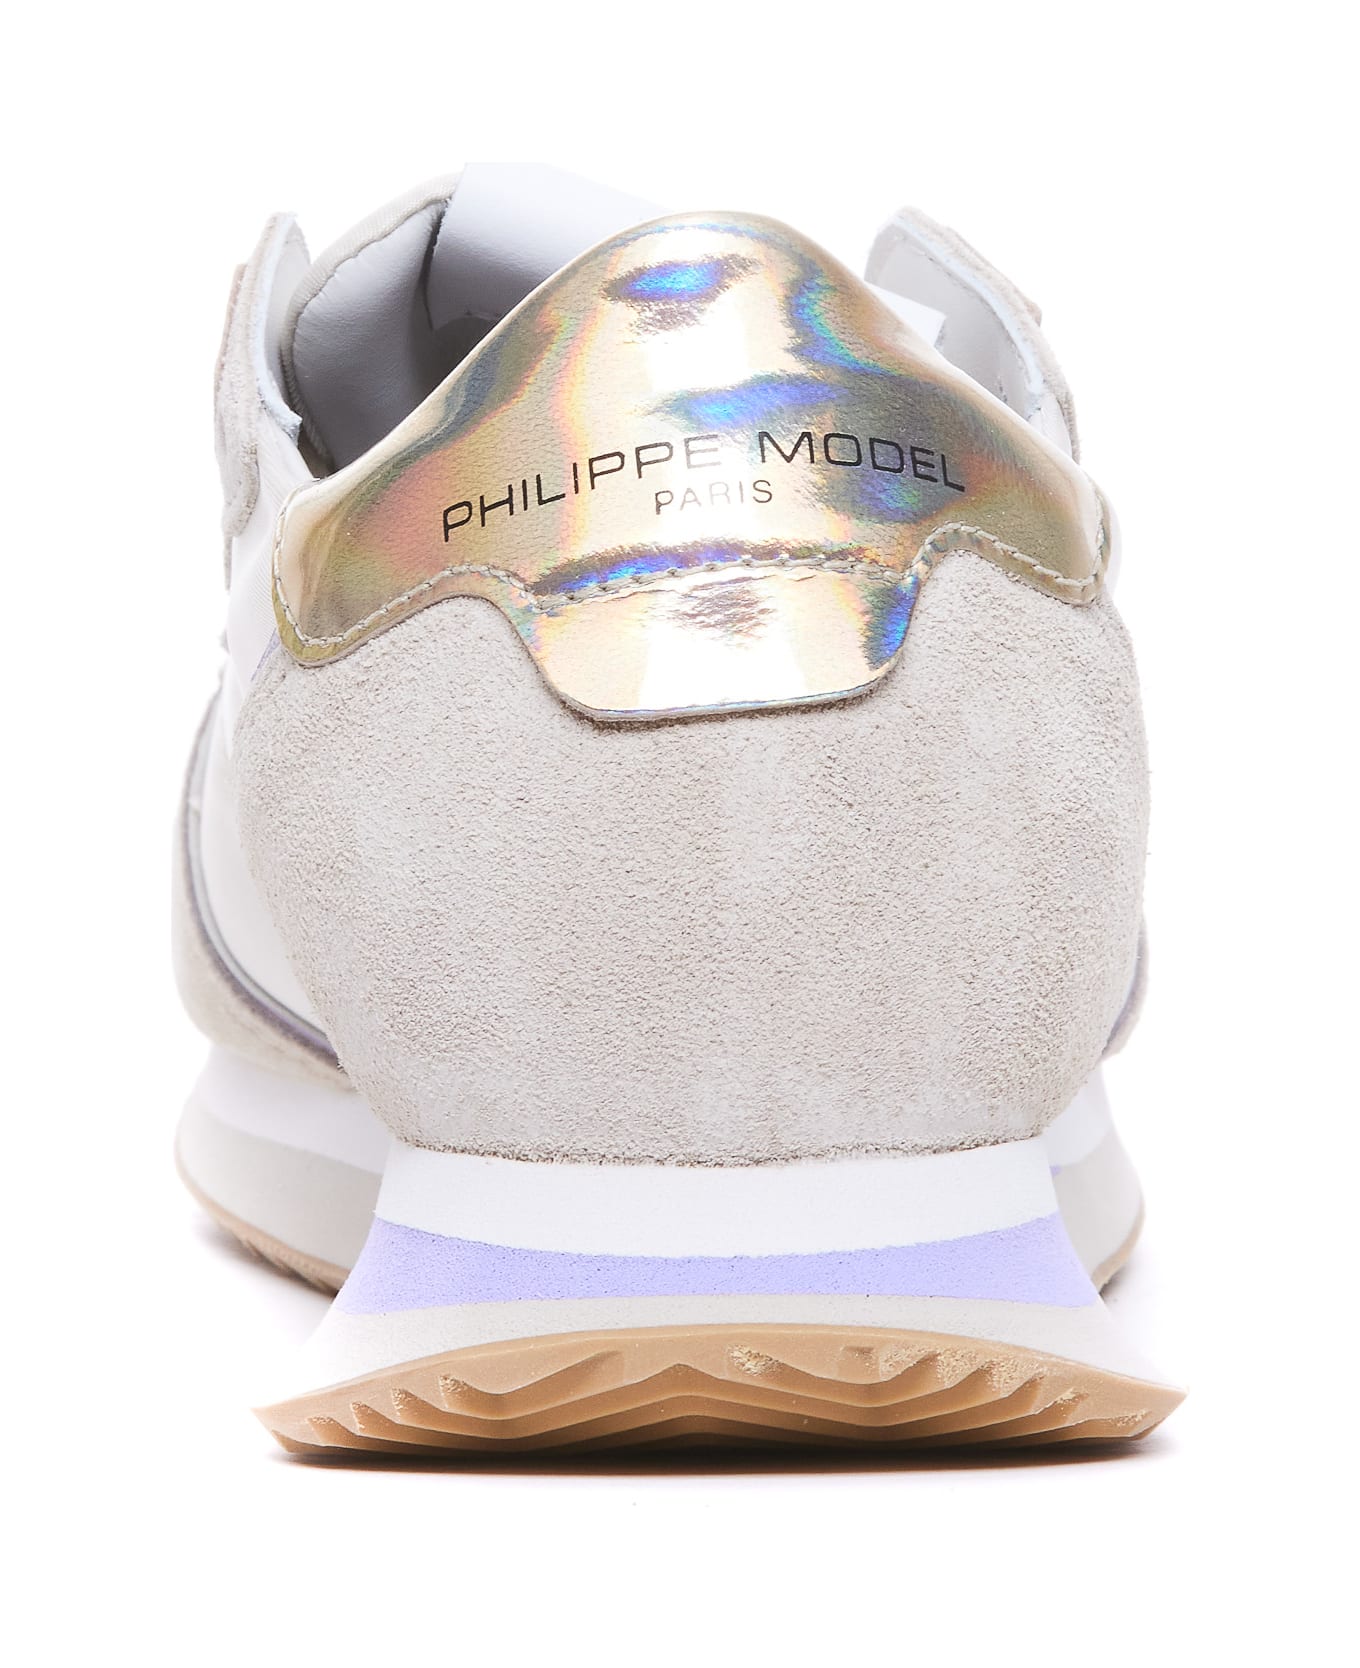 Philippe Model Trpx Sneakers - Beige